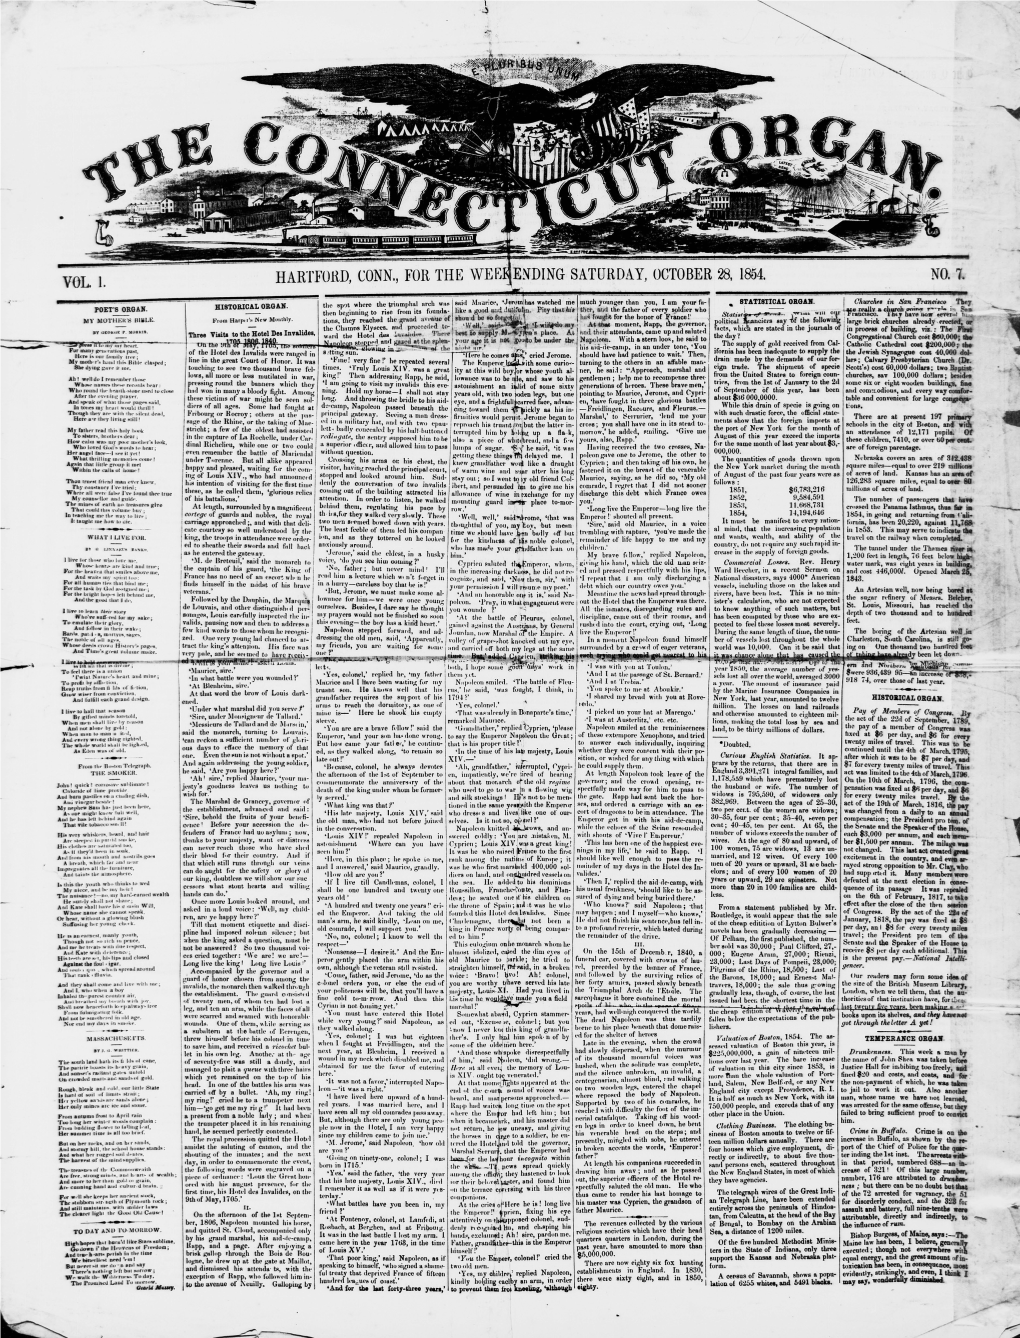 Hartford, Conn., for the We Ending Saturday, October 28, 1854